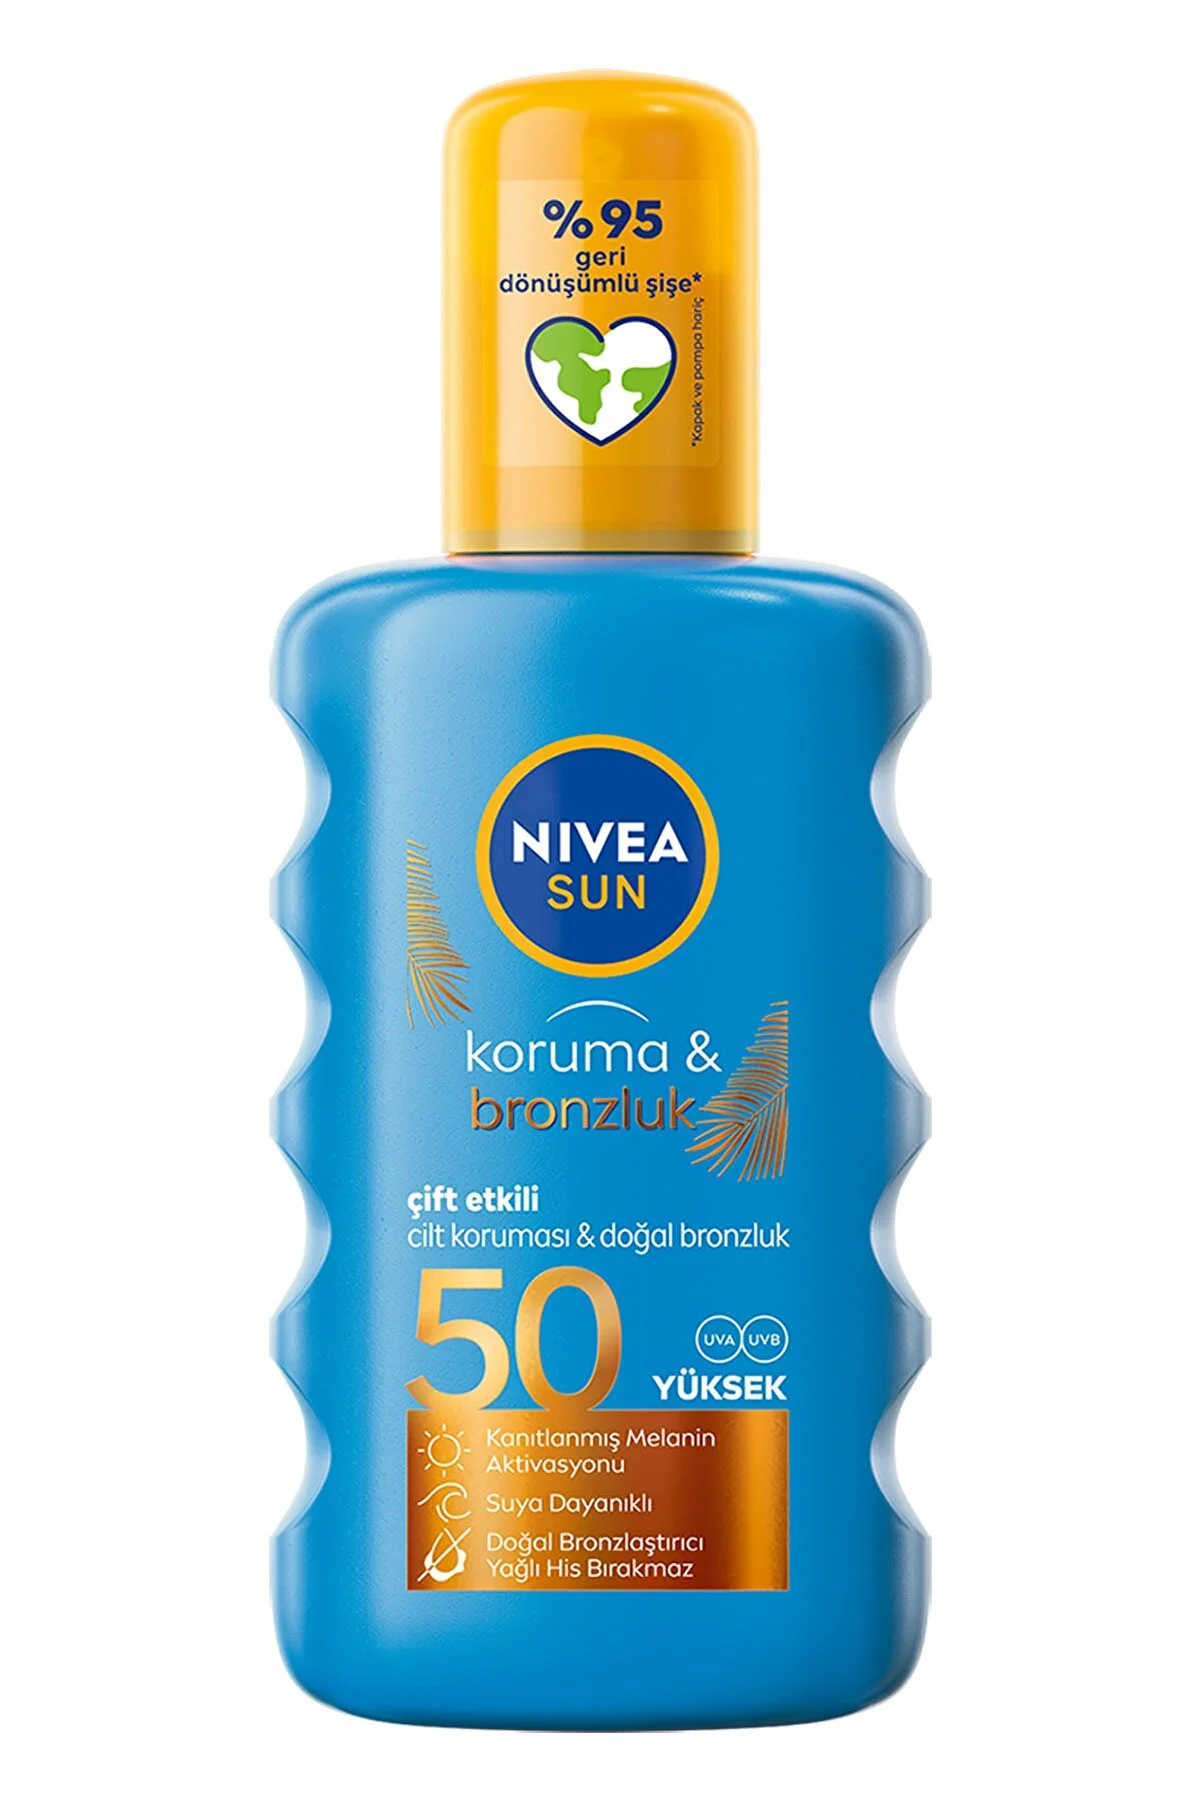 Nivea - Nivea Sun Protect&Bronze Koruma Broznluk Spf 50 Spray 200 ml